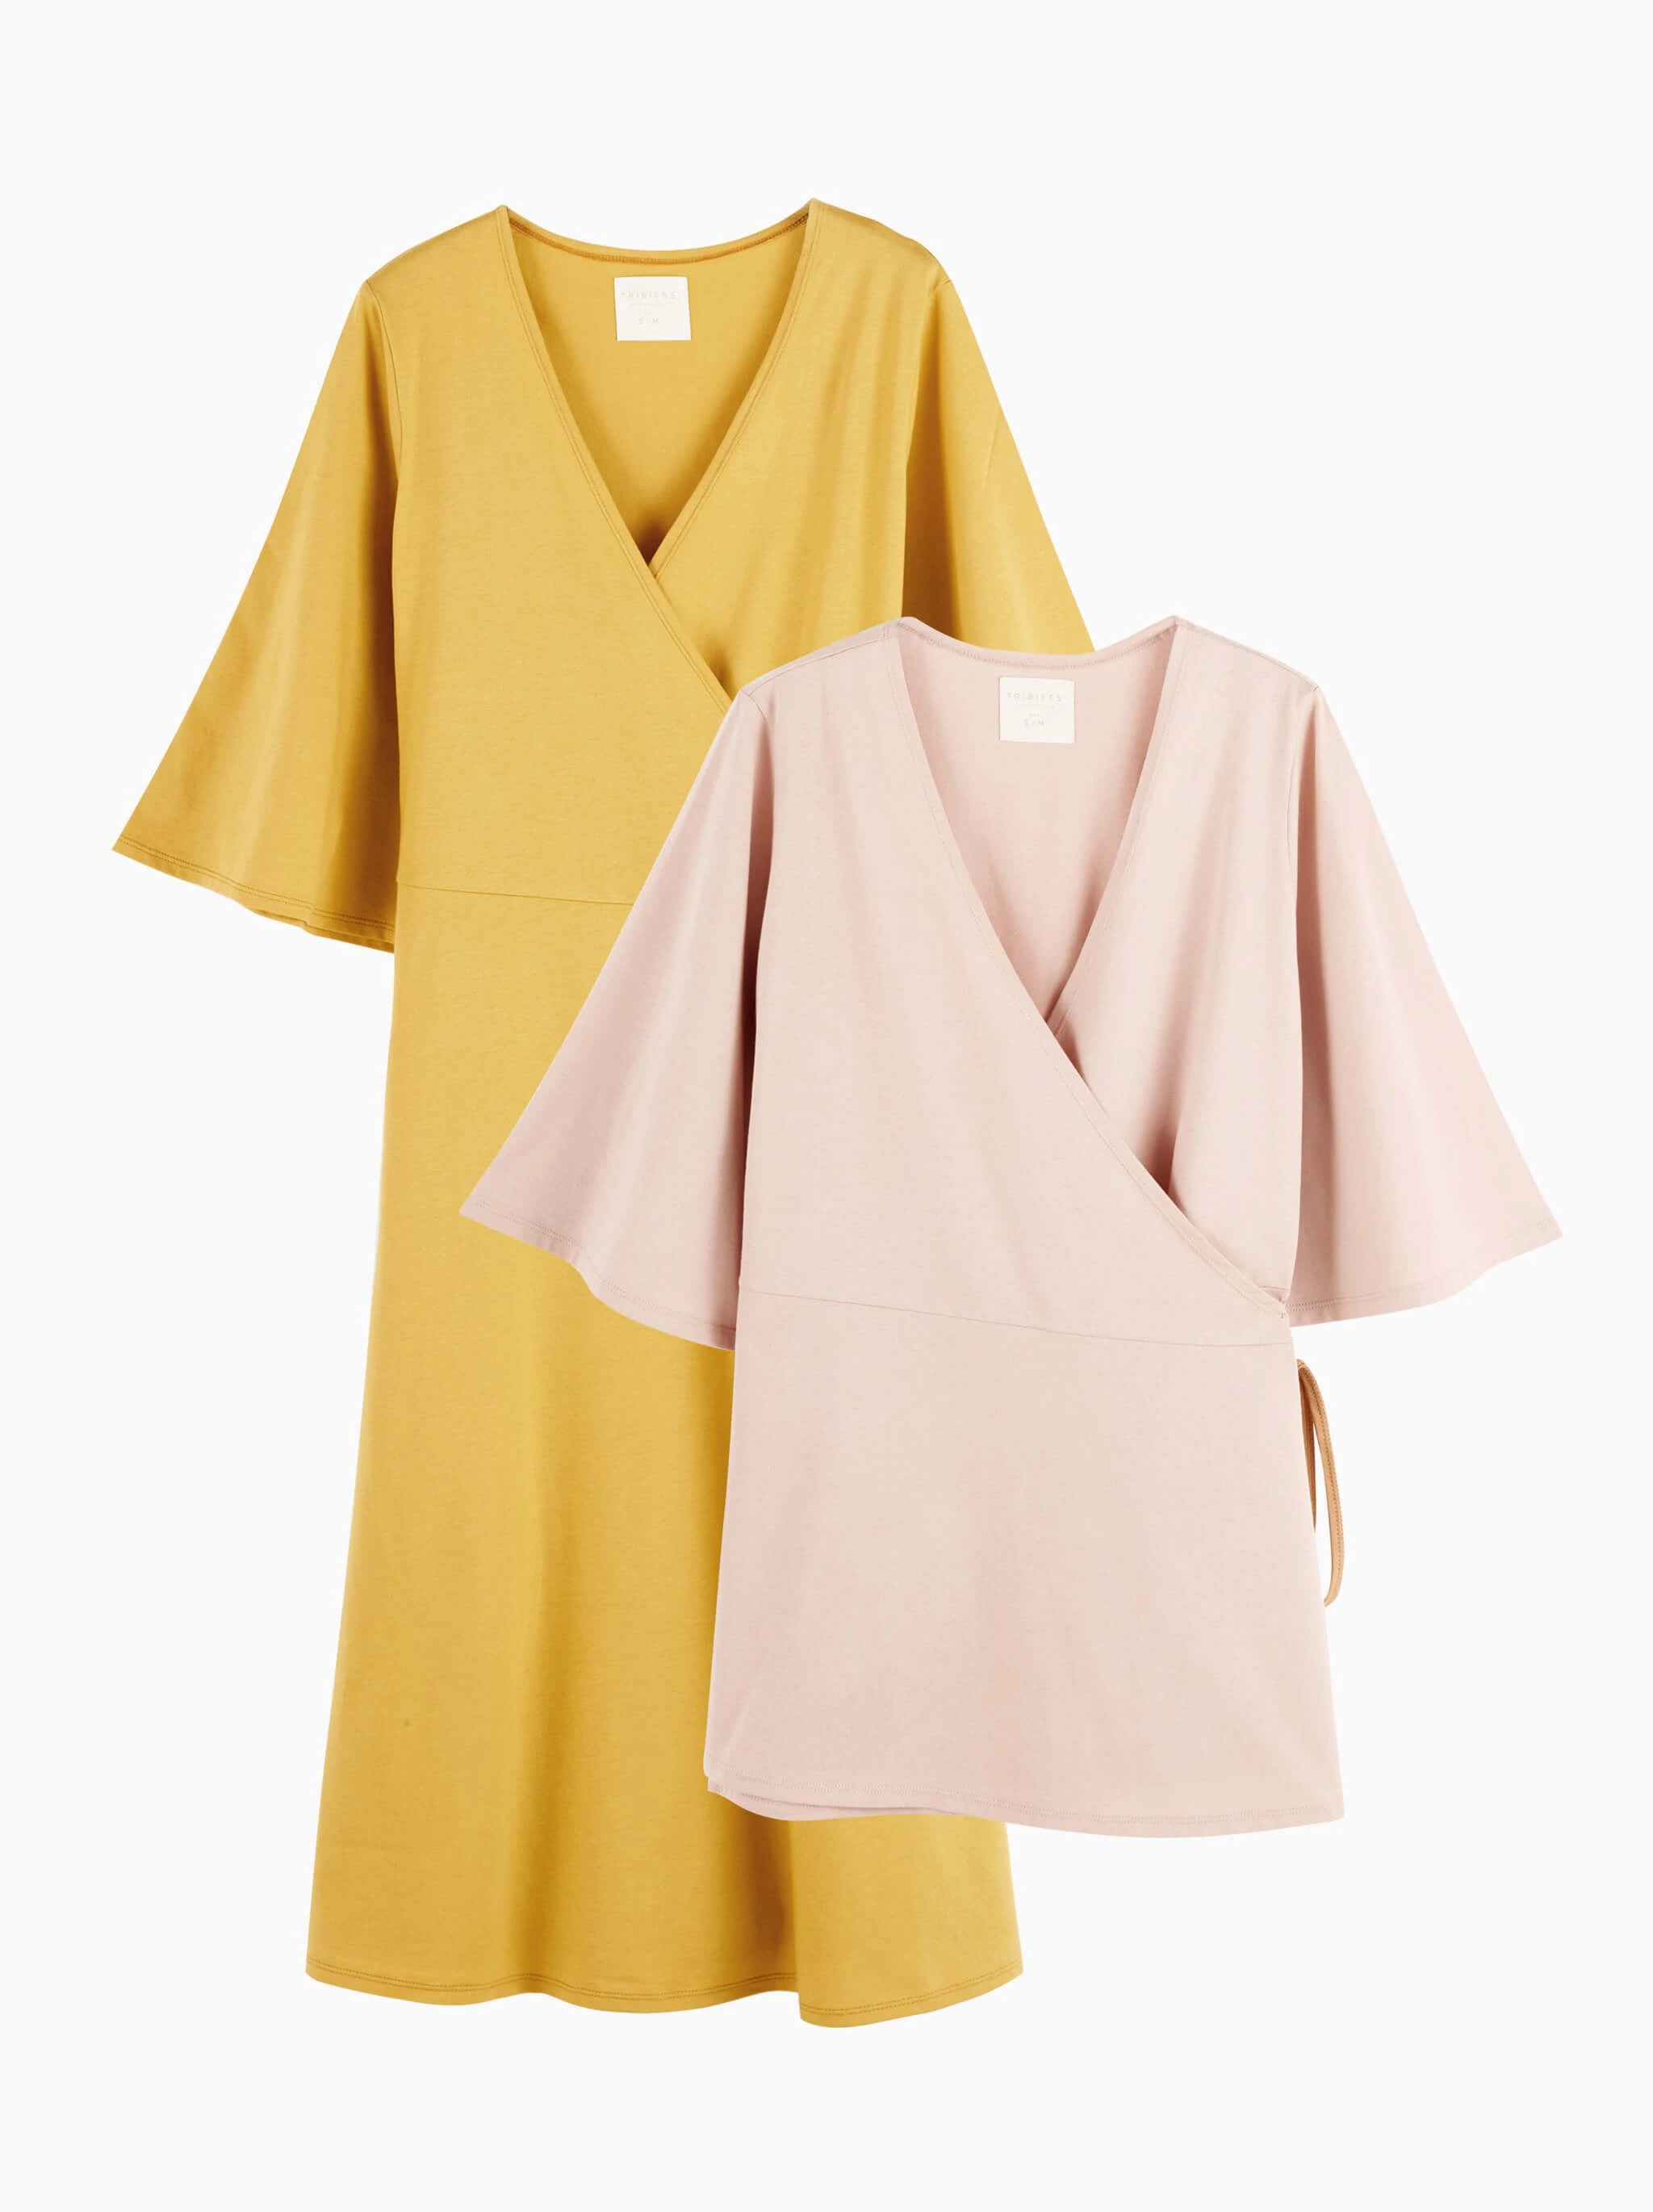 pregnancy and postpartum set · mustard dress, misty rose crossover t-shirt